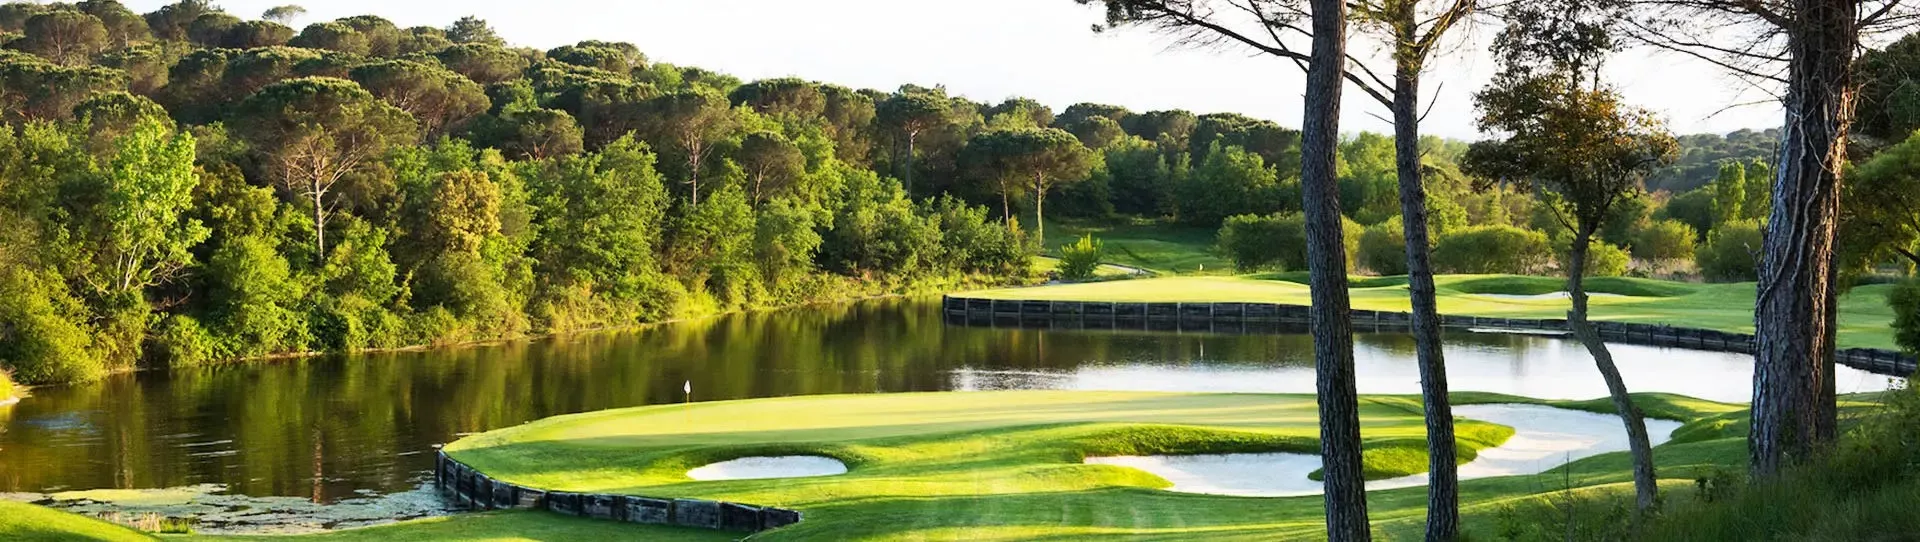 Spain golf courses - PGA Catalunya - Stadium Course - Photo 2